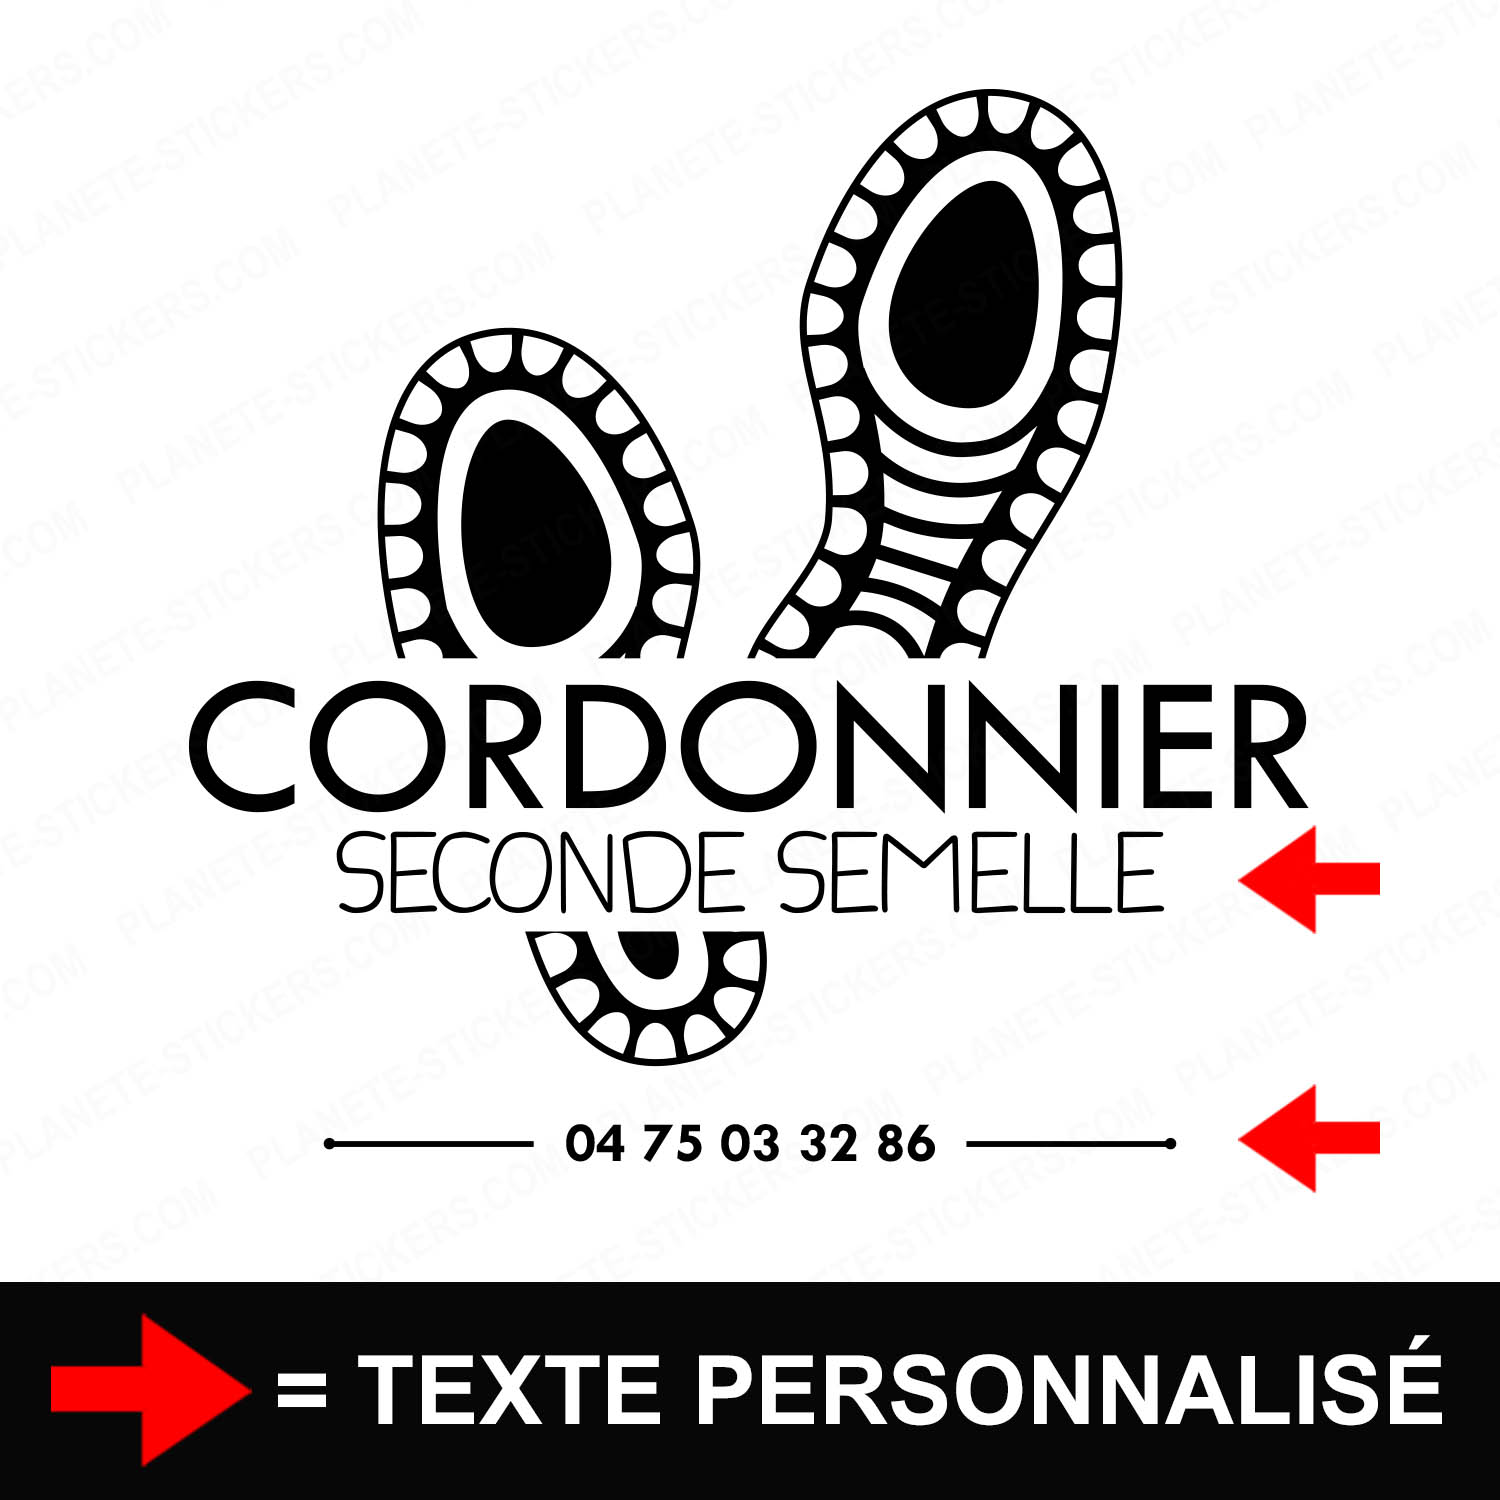 ref1cordonniervitrine-stickers-cordonnerie-vitrine-sticker-personnalisé-autocollant-atelier-chaussure-reparation-pro-professionnel-2